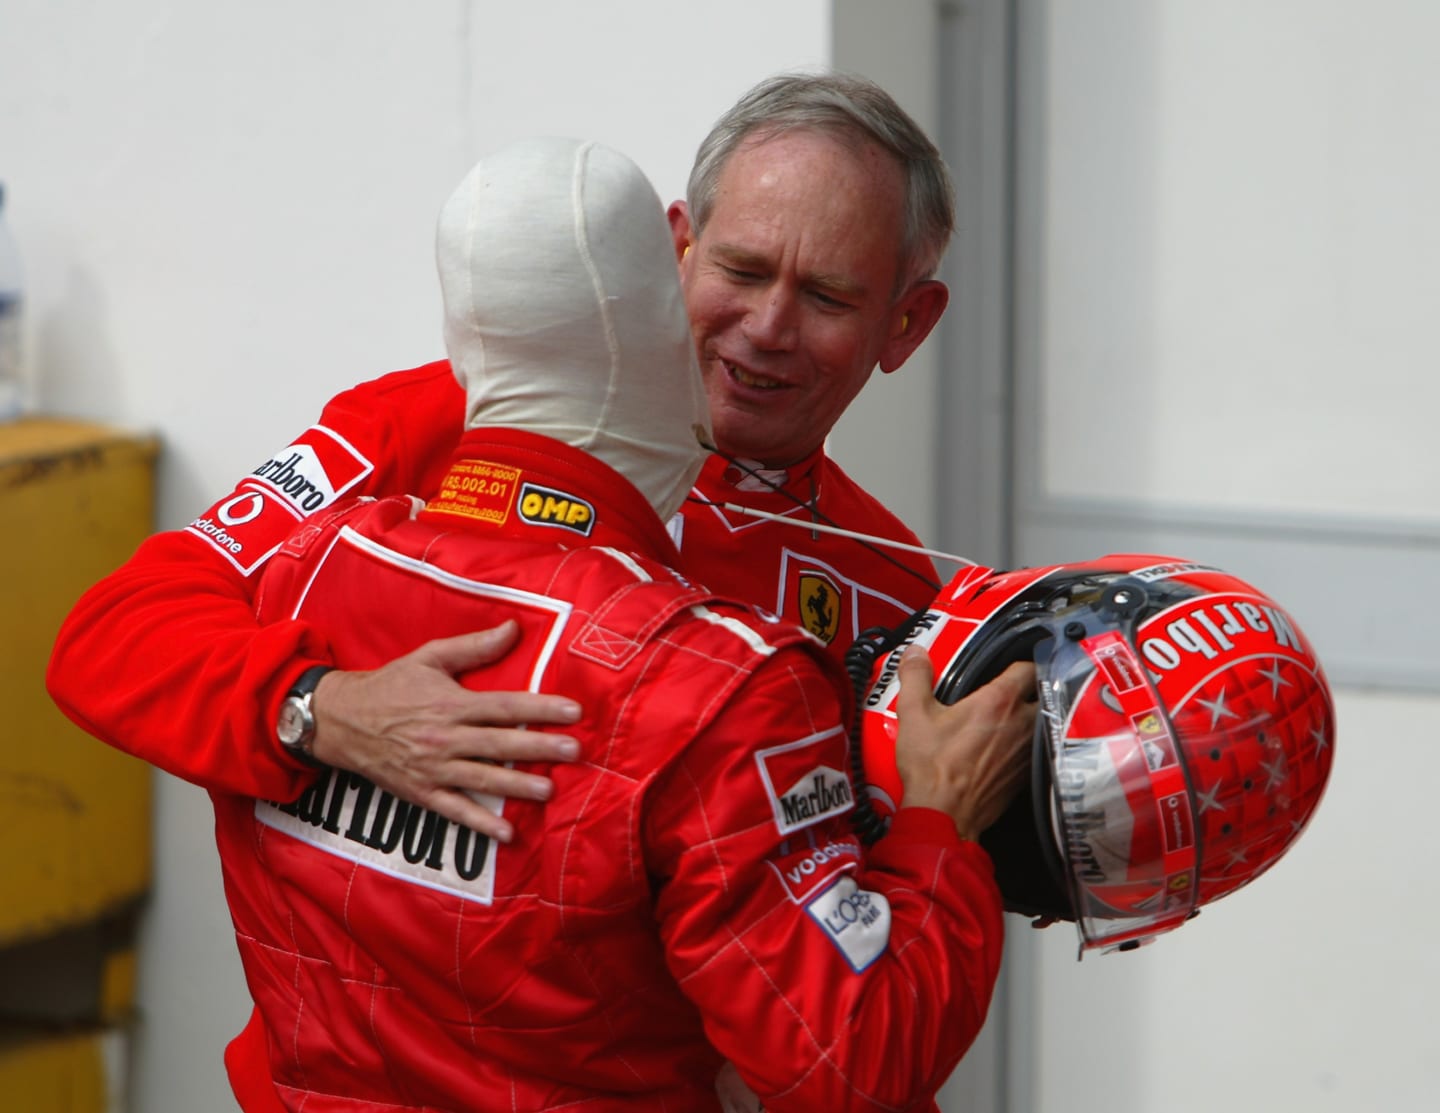 IMOLA - APRIL 14:  Ferrari driver Michael Schumacher of Germany celebrates victory with Ferrari